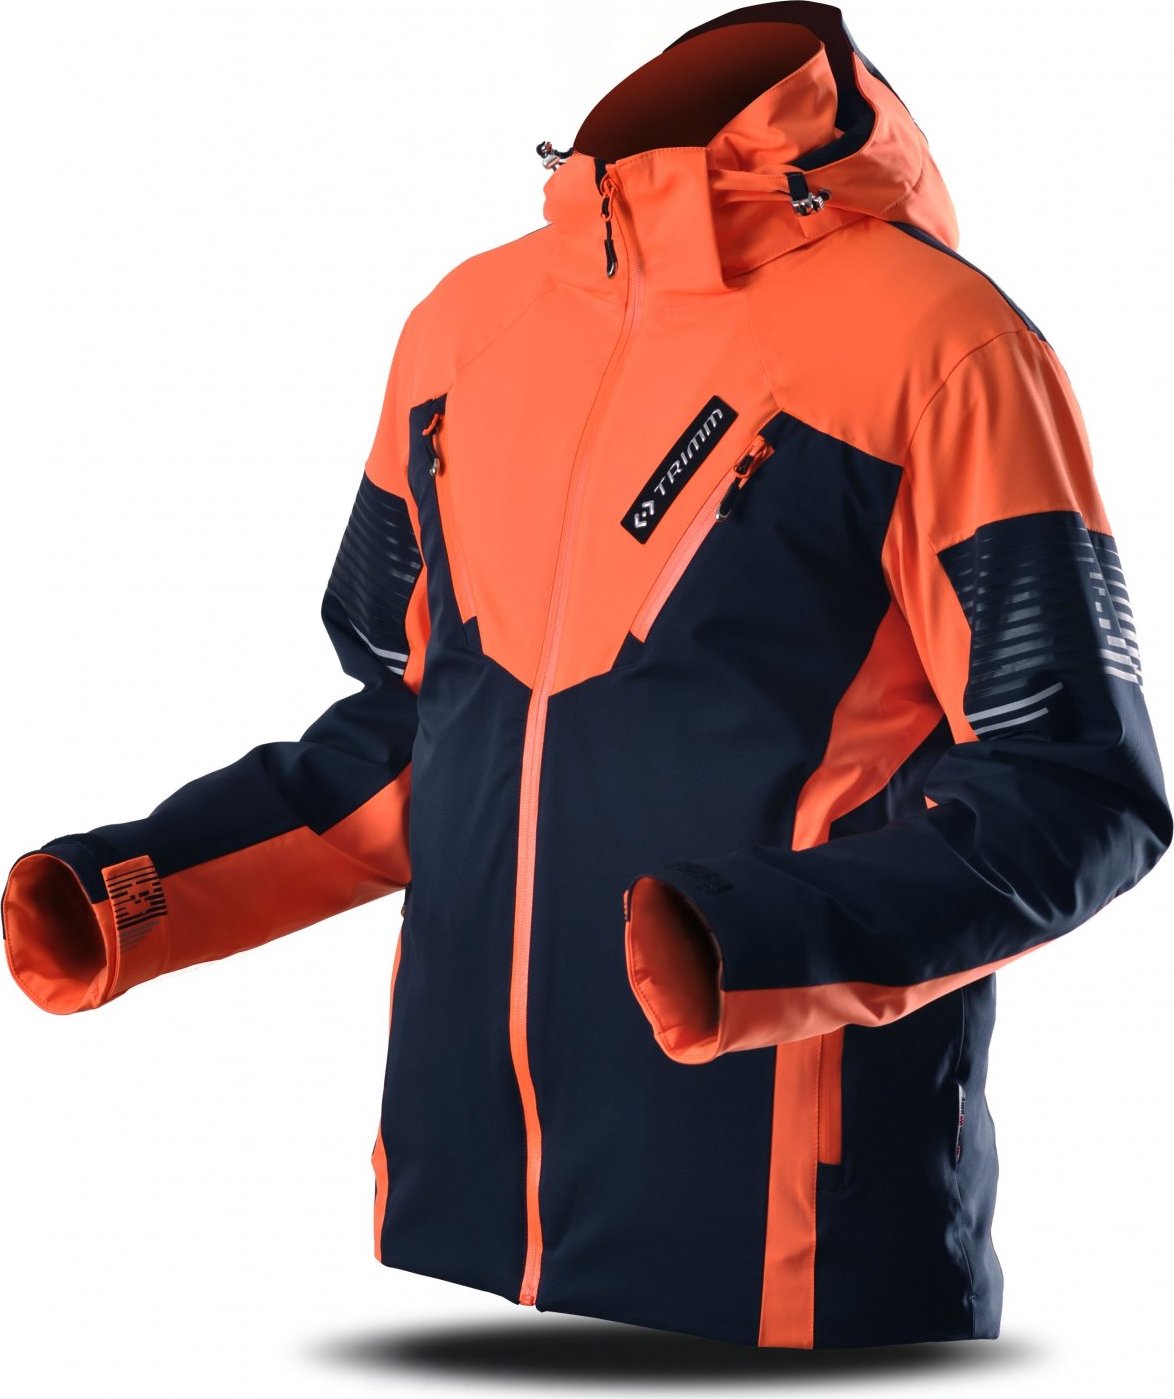 Pánská lyžařská bunda TRIMM Avalon dark blue/signal orange Velikost: M, Barva: dark blue/signal orange